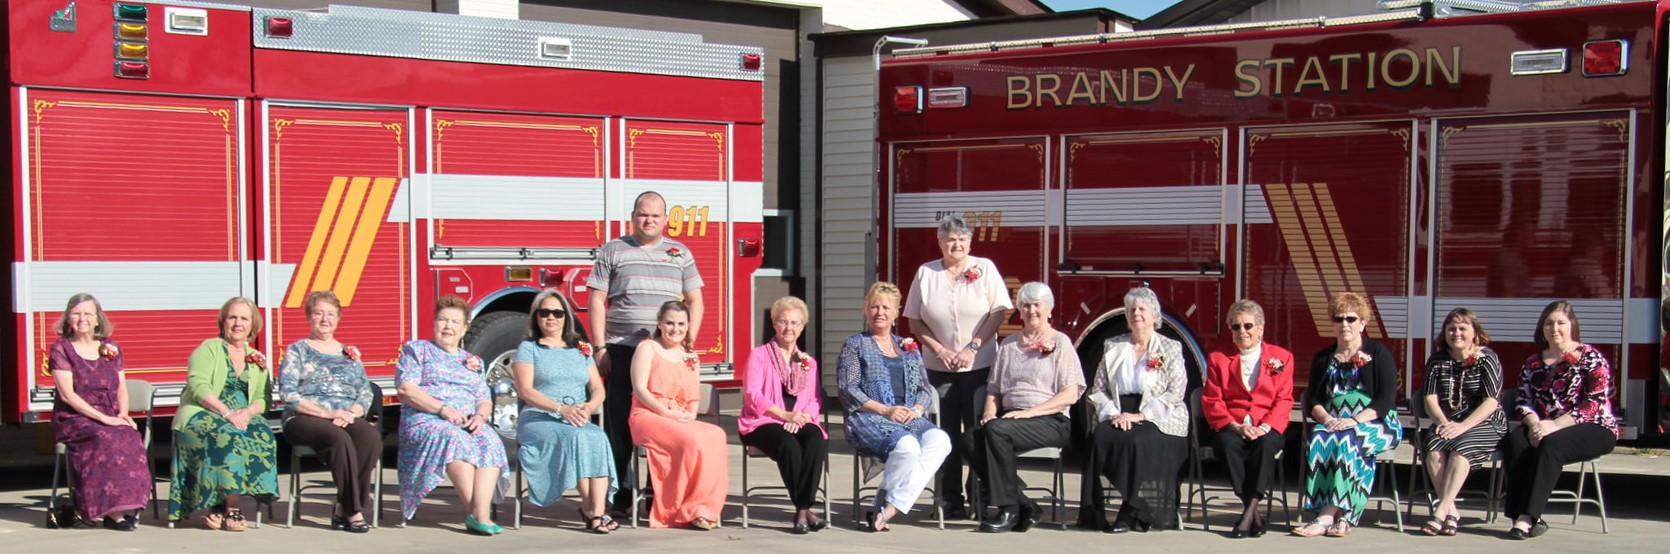 Brandy Station Volunteer Fire Department